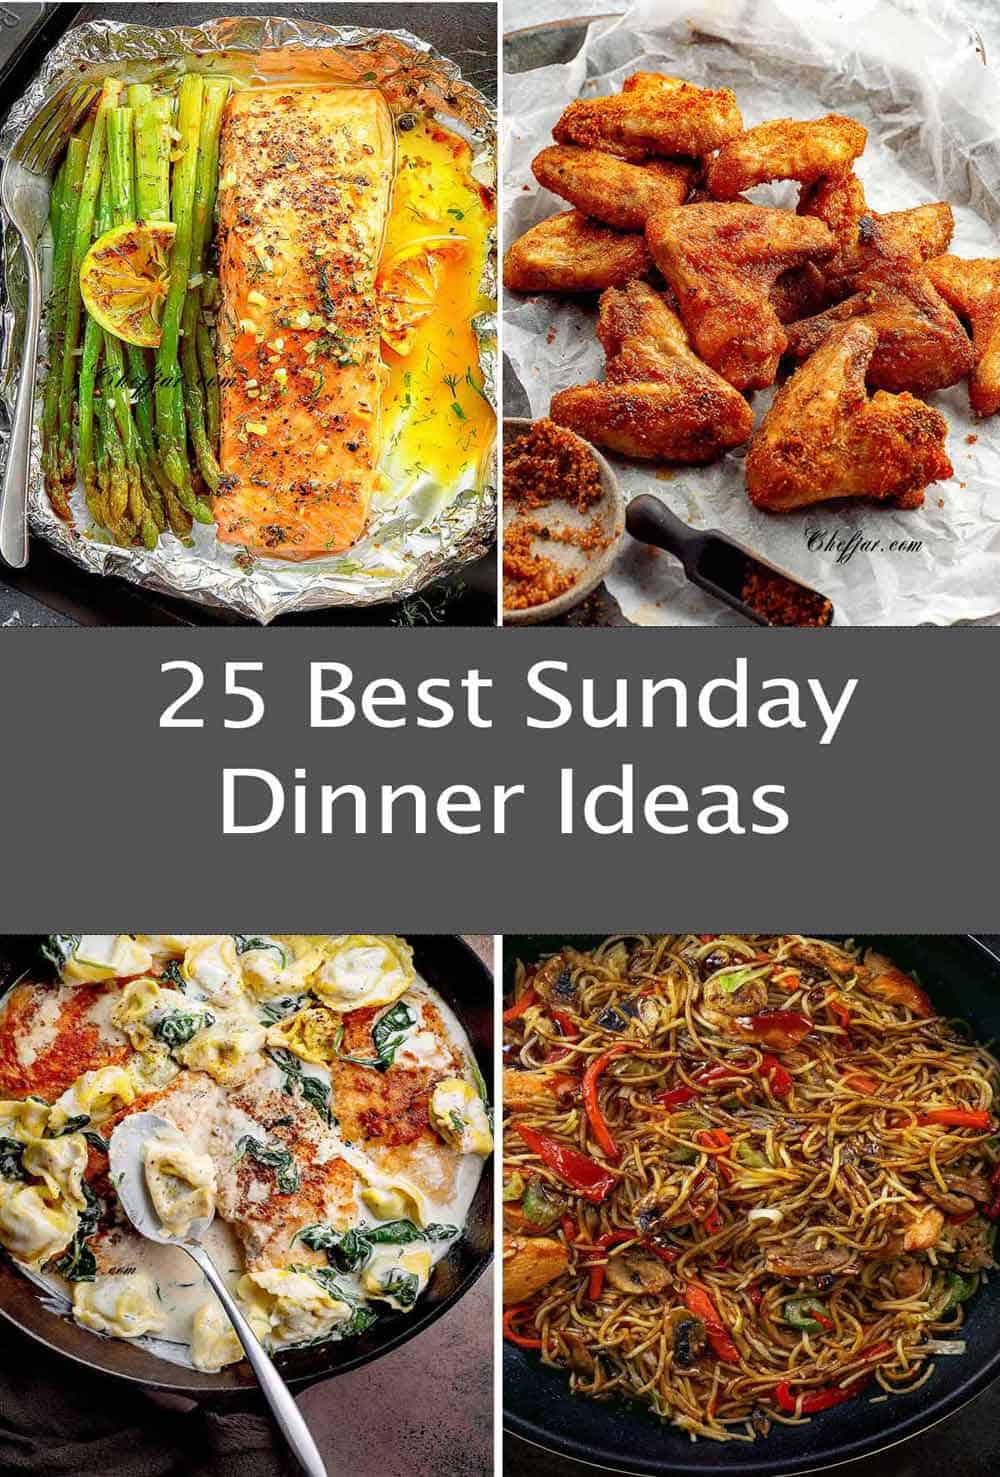 25 Sunday Dinner Ideas | Chefjar